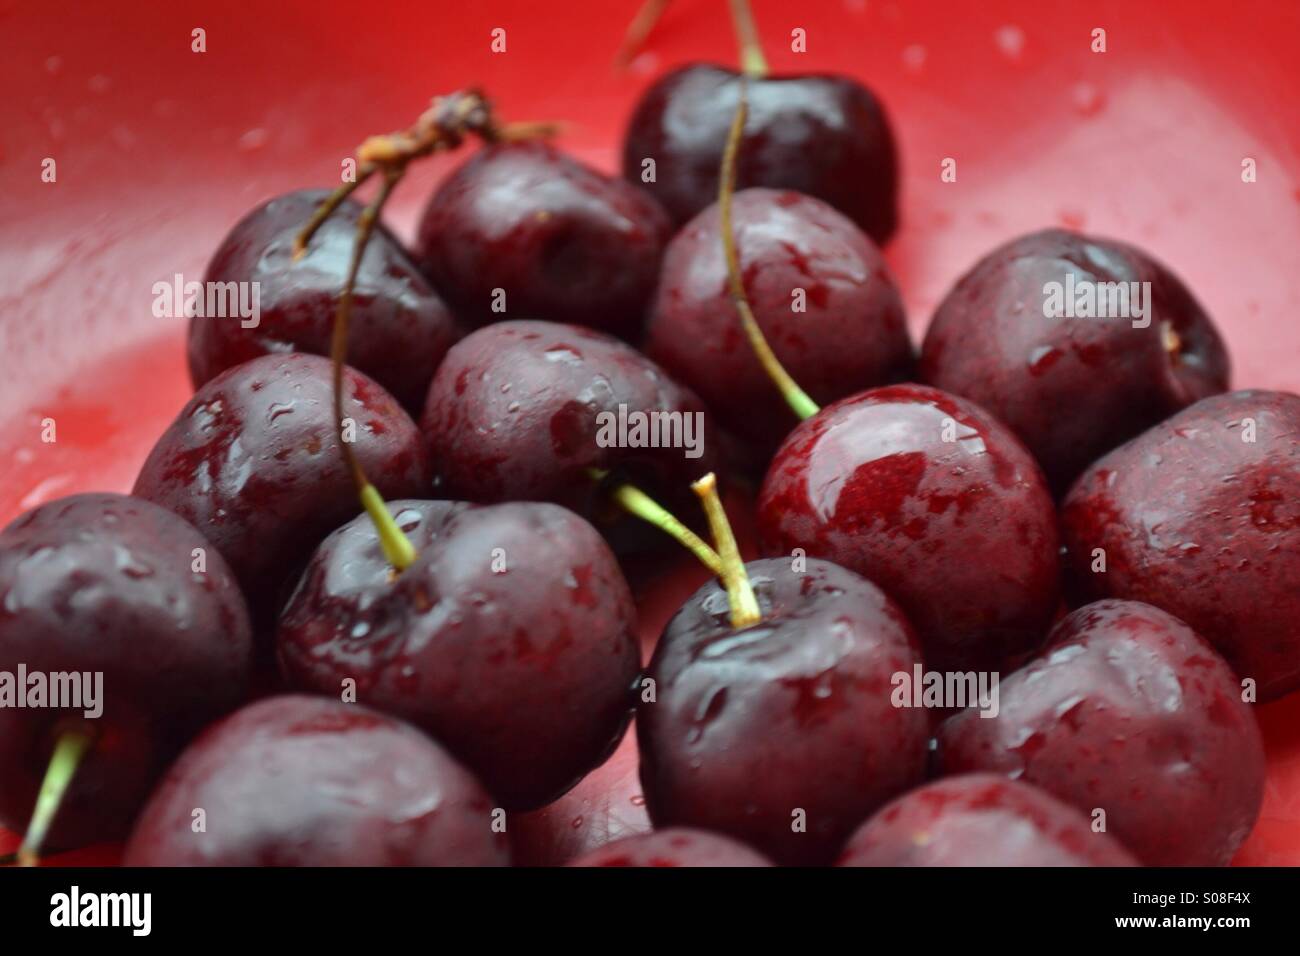 Cherries in red bowl Stock Photo